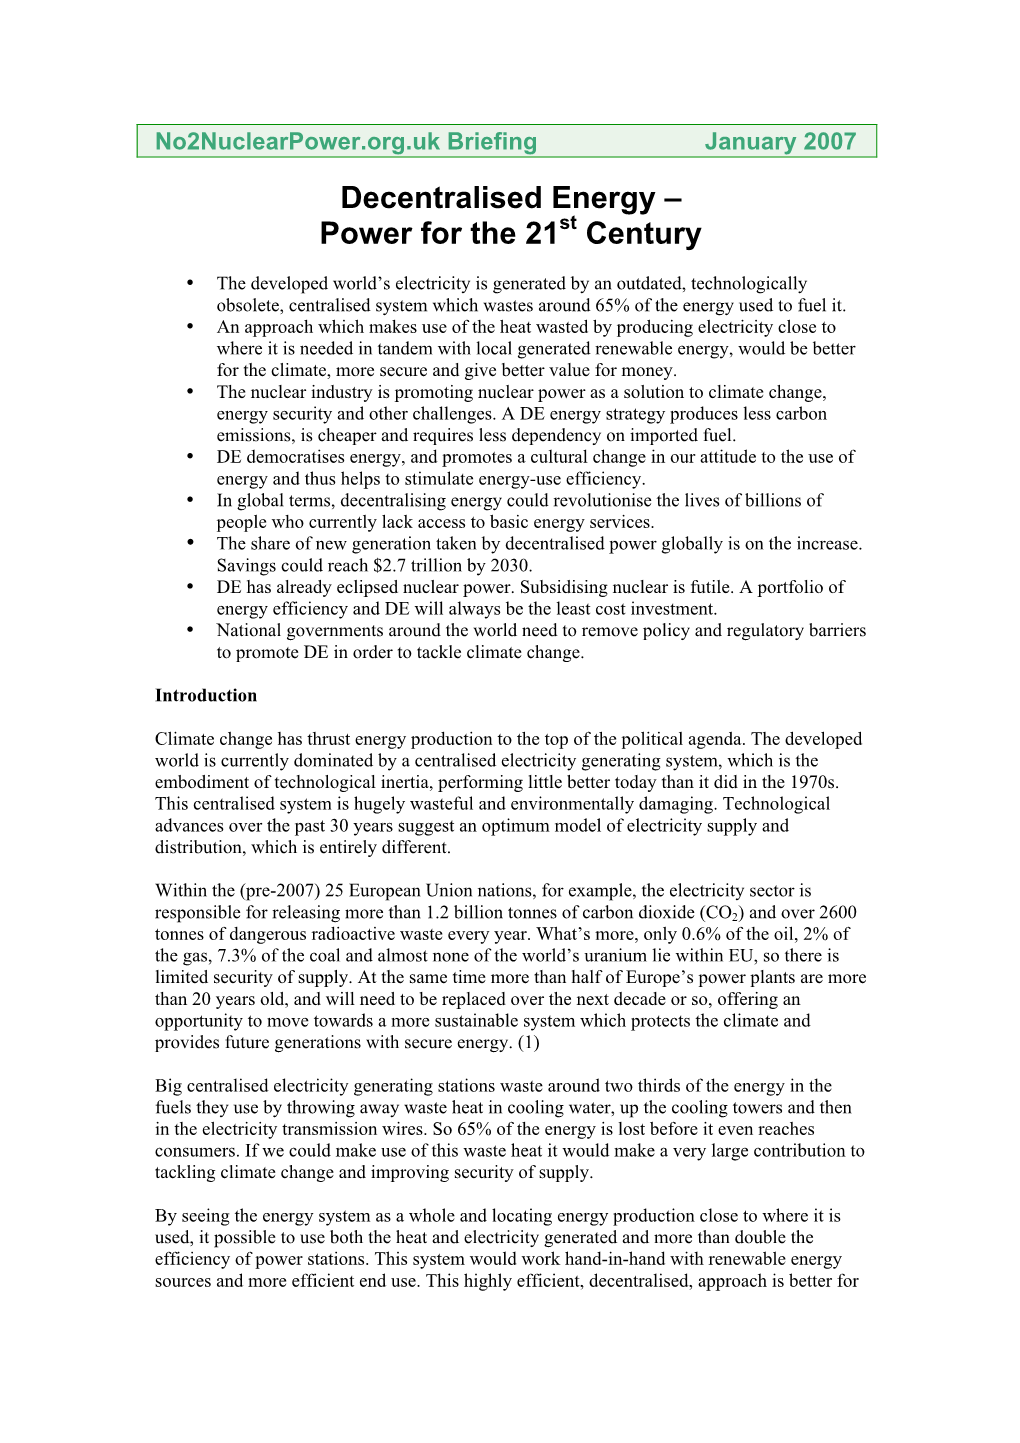 Decentralised Energy – Power for the 21St Century